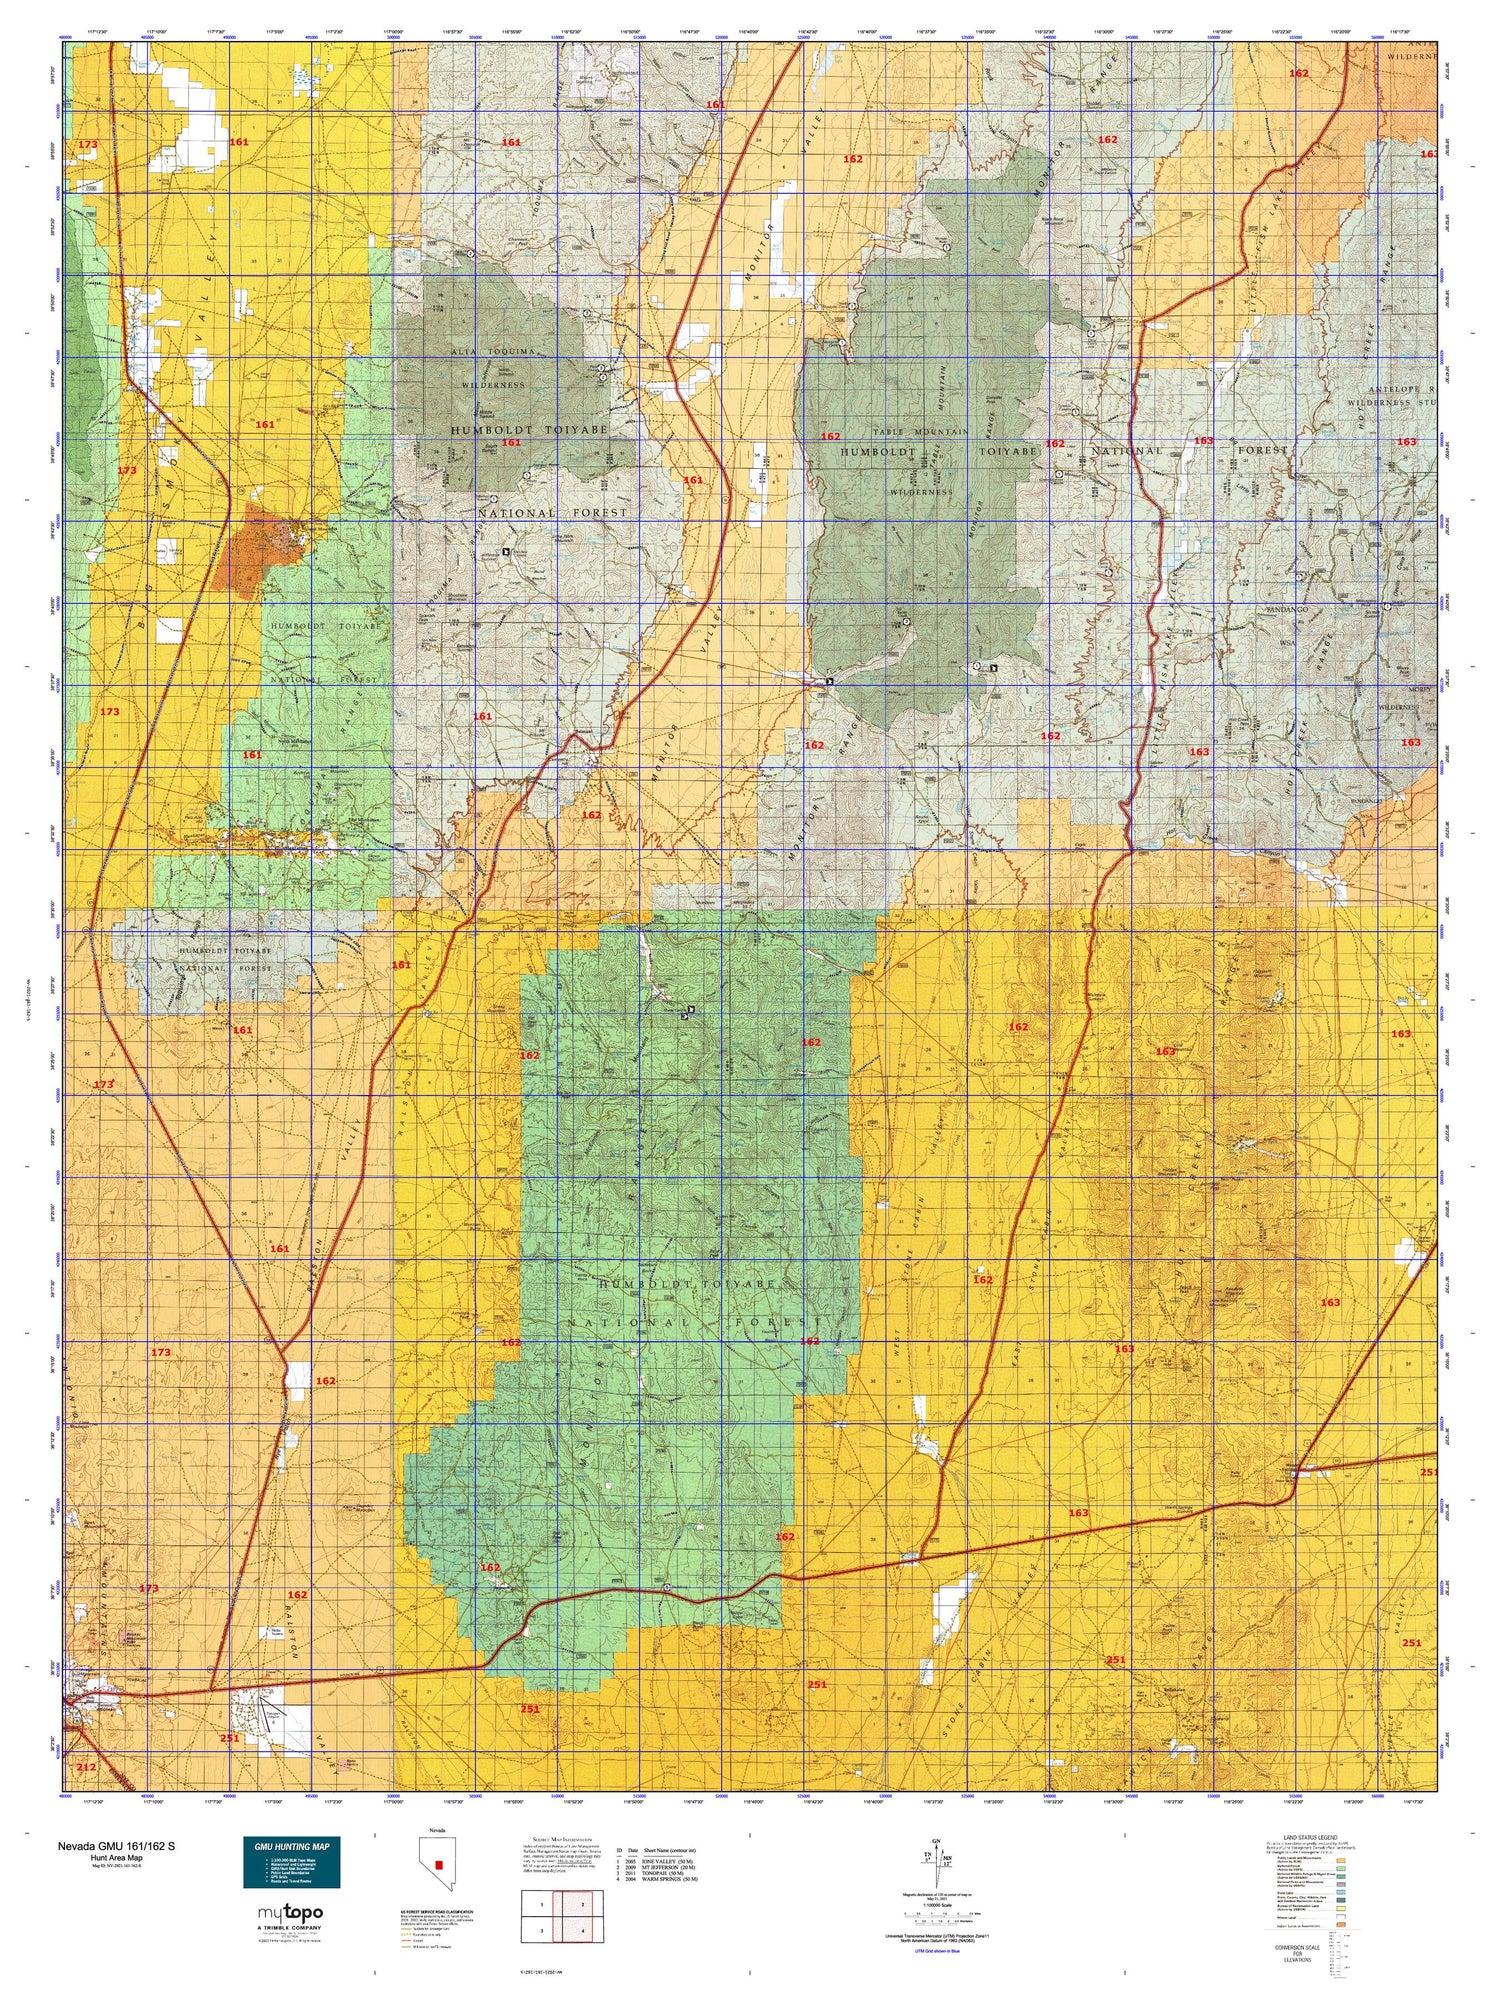 Nevada GMU 161/162 S Map Image